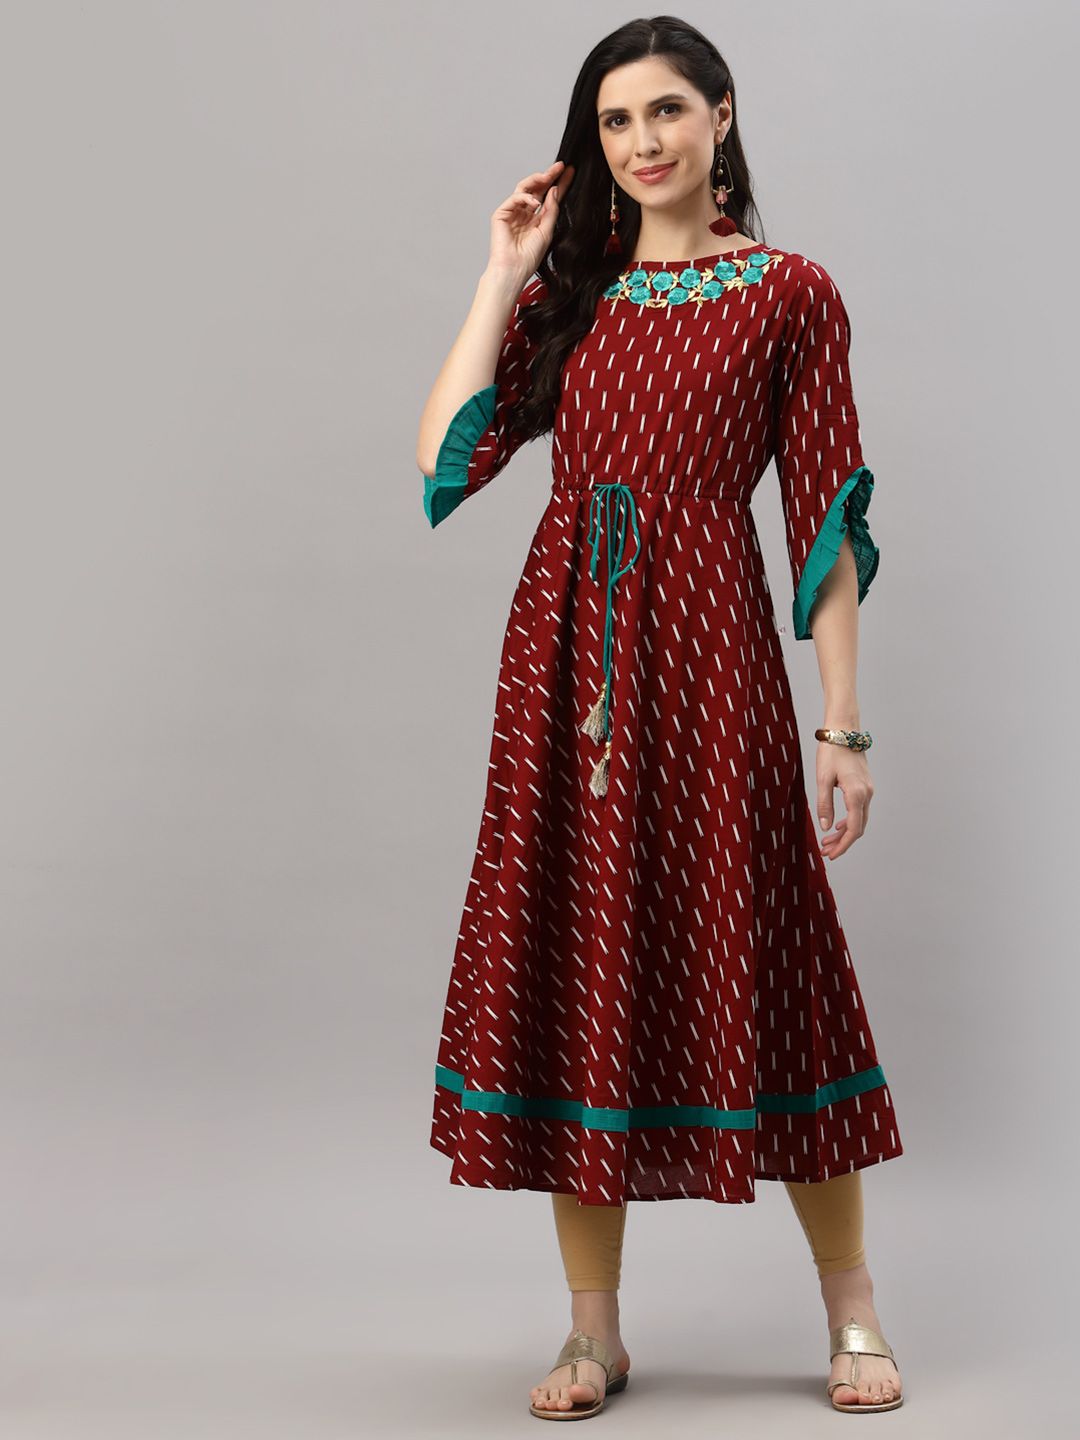 YASH GALLERY Women Maroon Ethnic Motifs Printed Bell Sleeves Dress Price in India